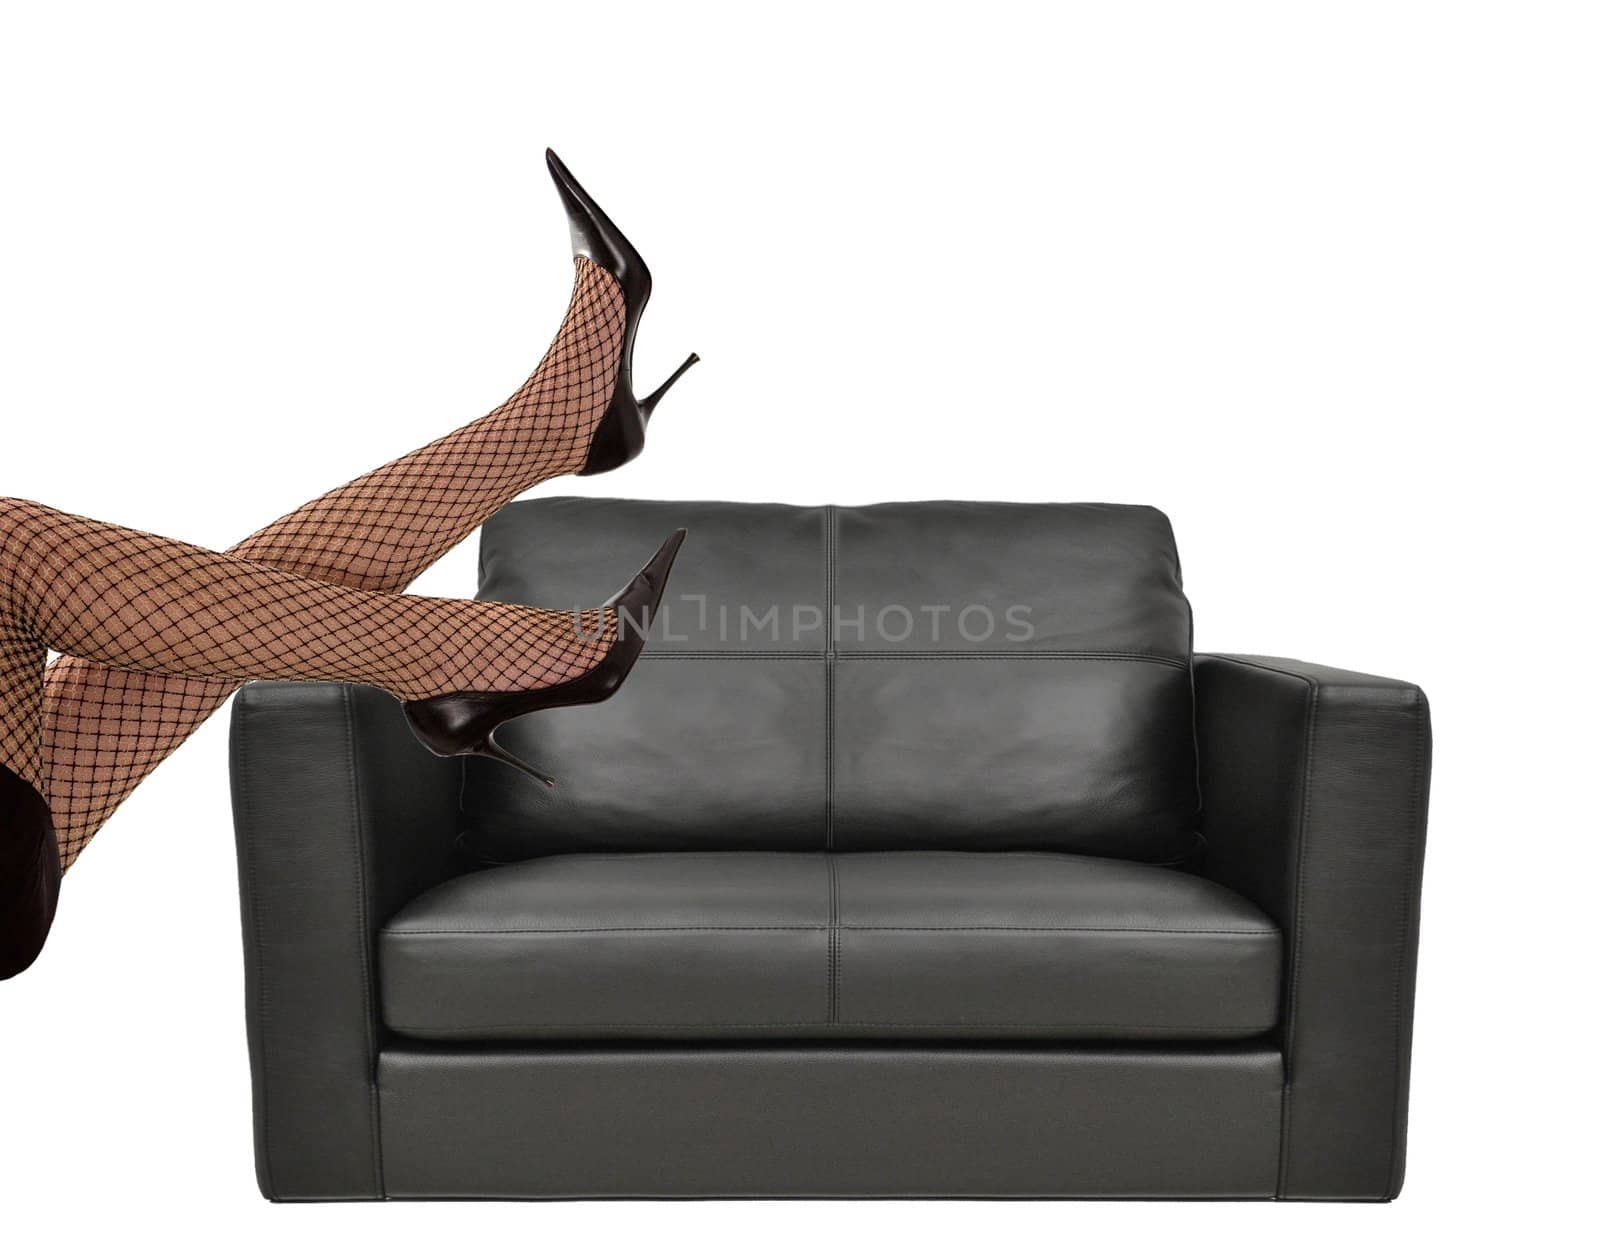 Woman with beautiful legs sitting on sofa